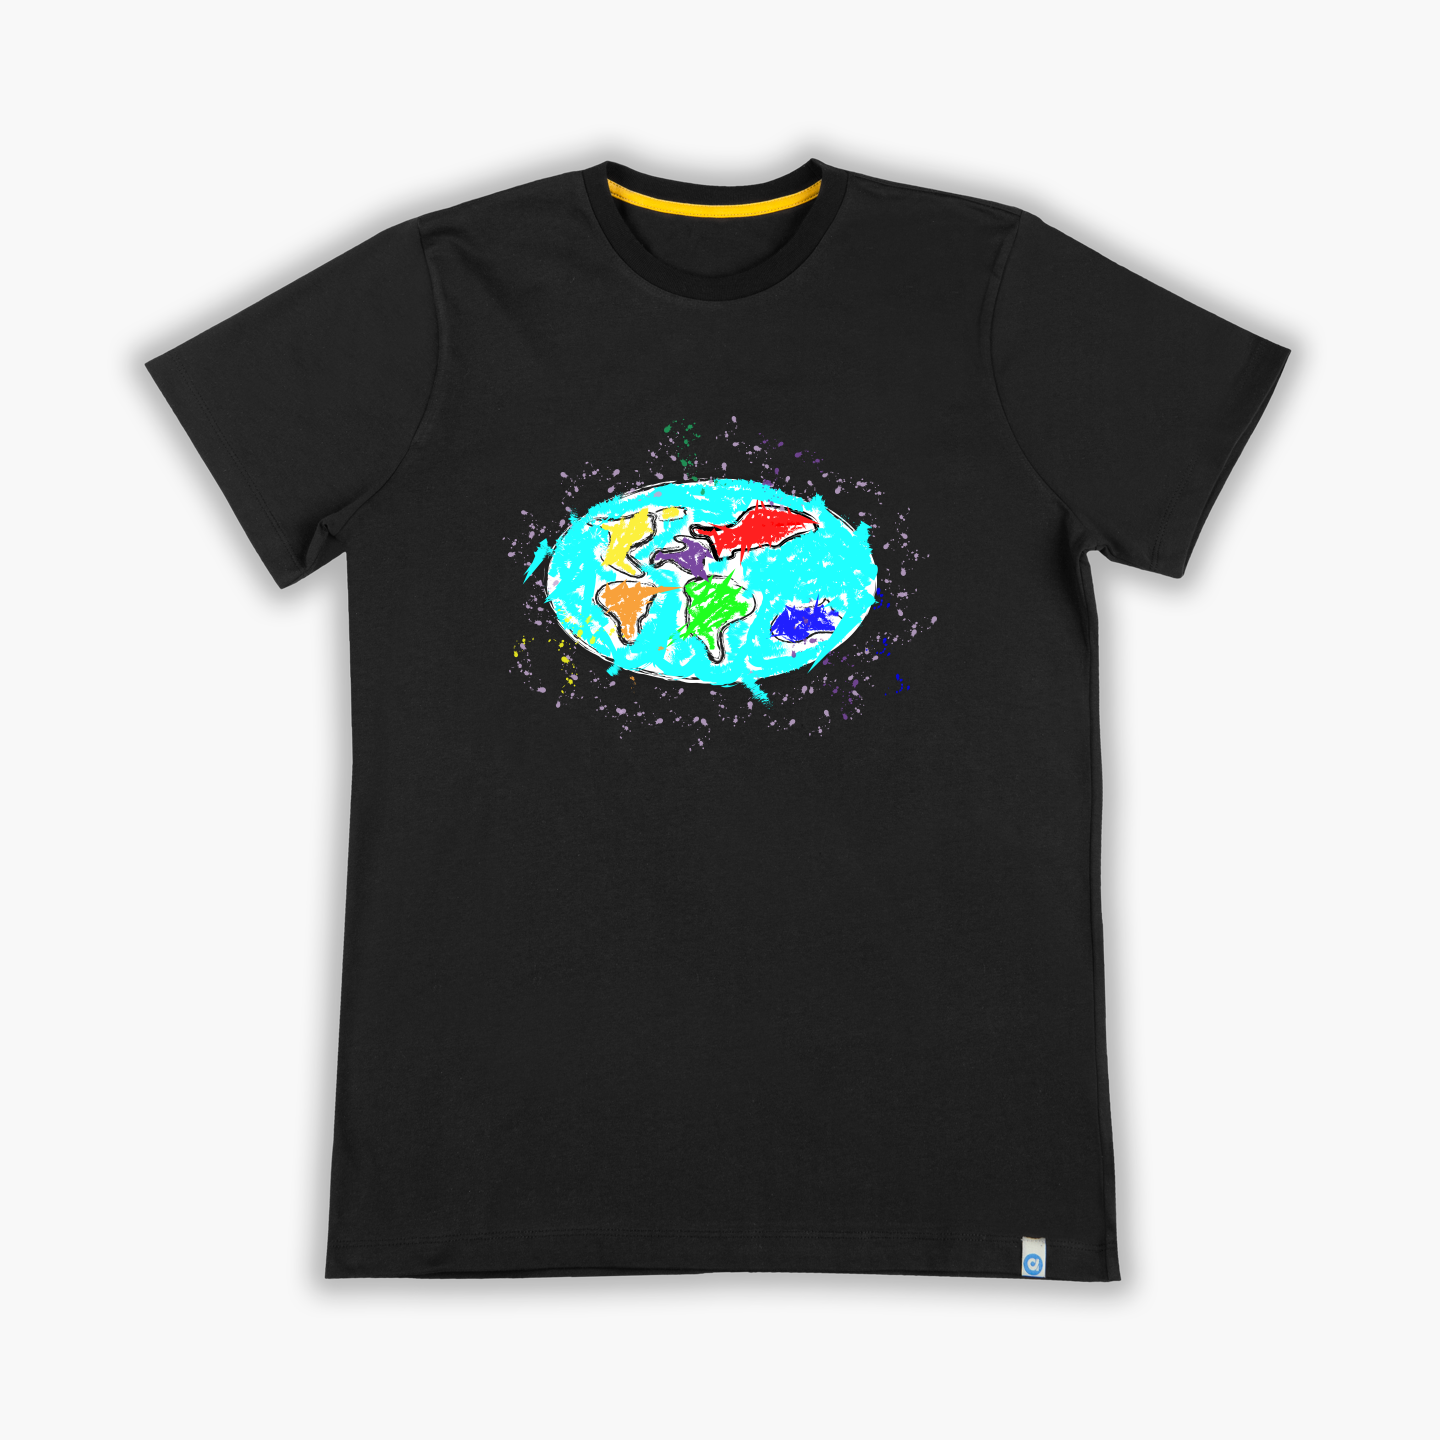 Earthland - Tişört